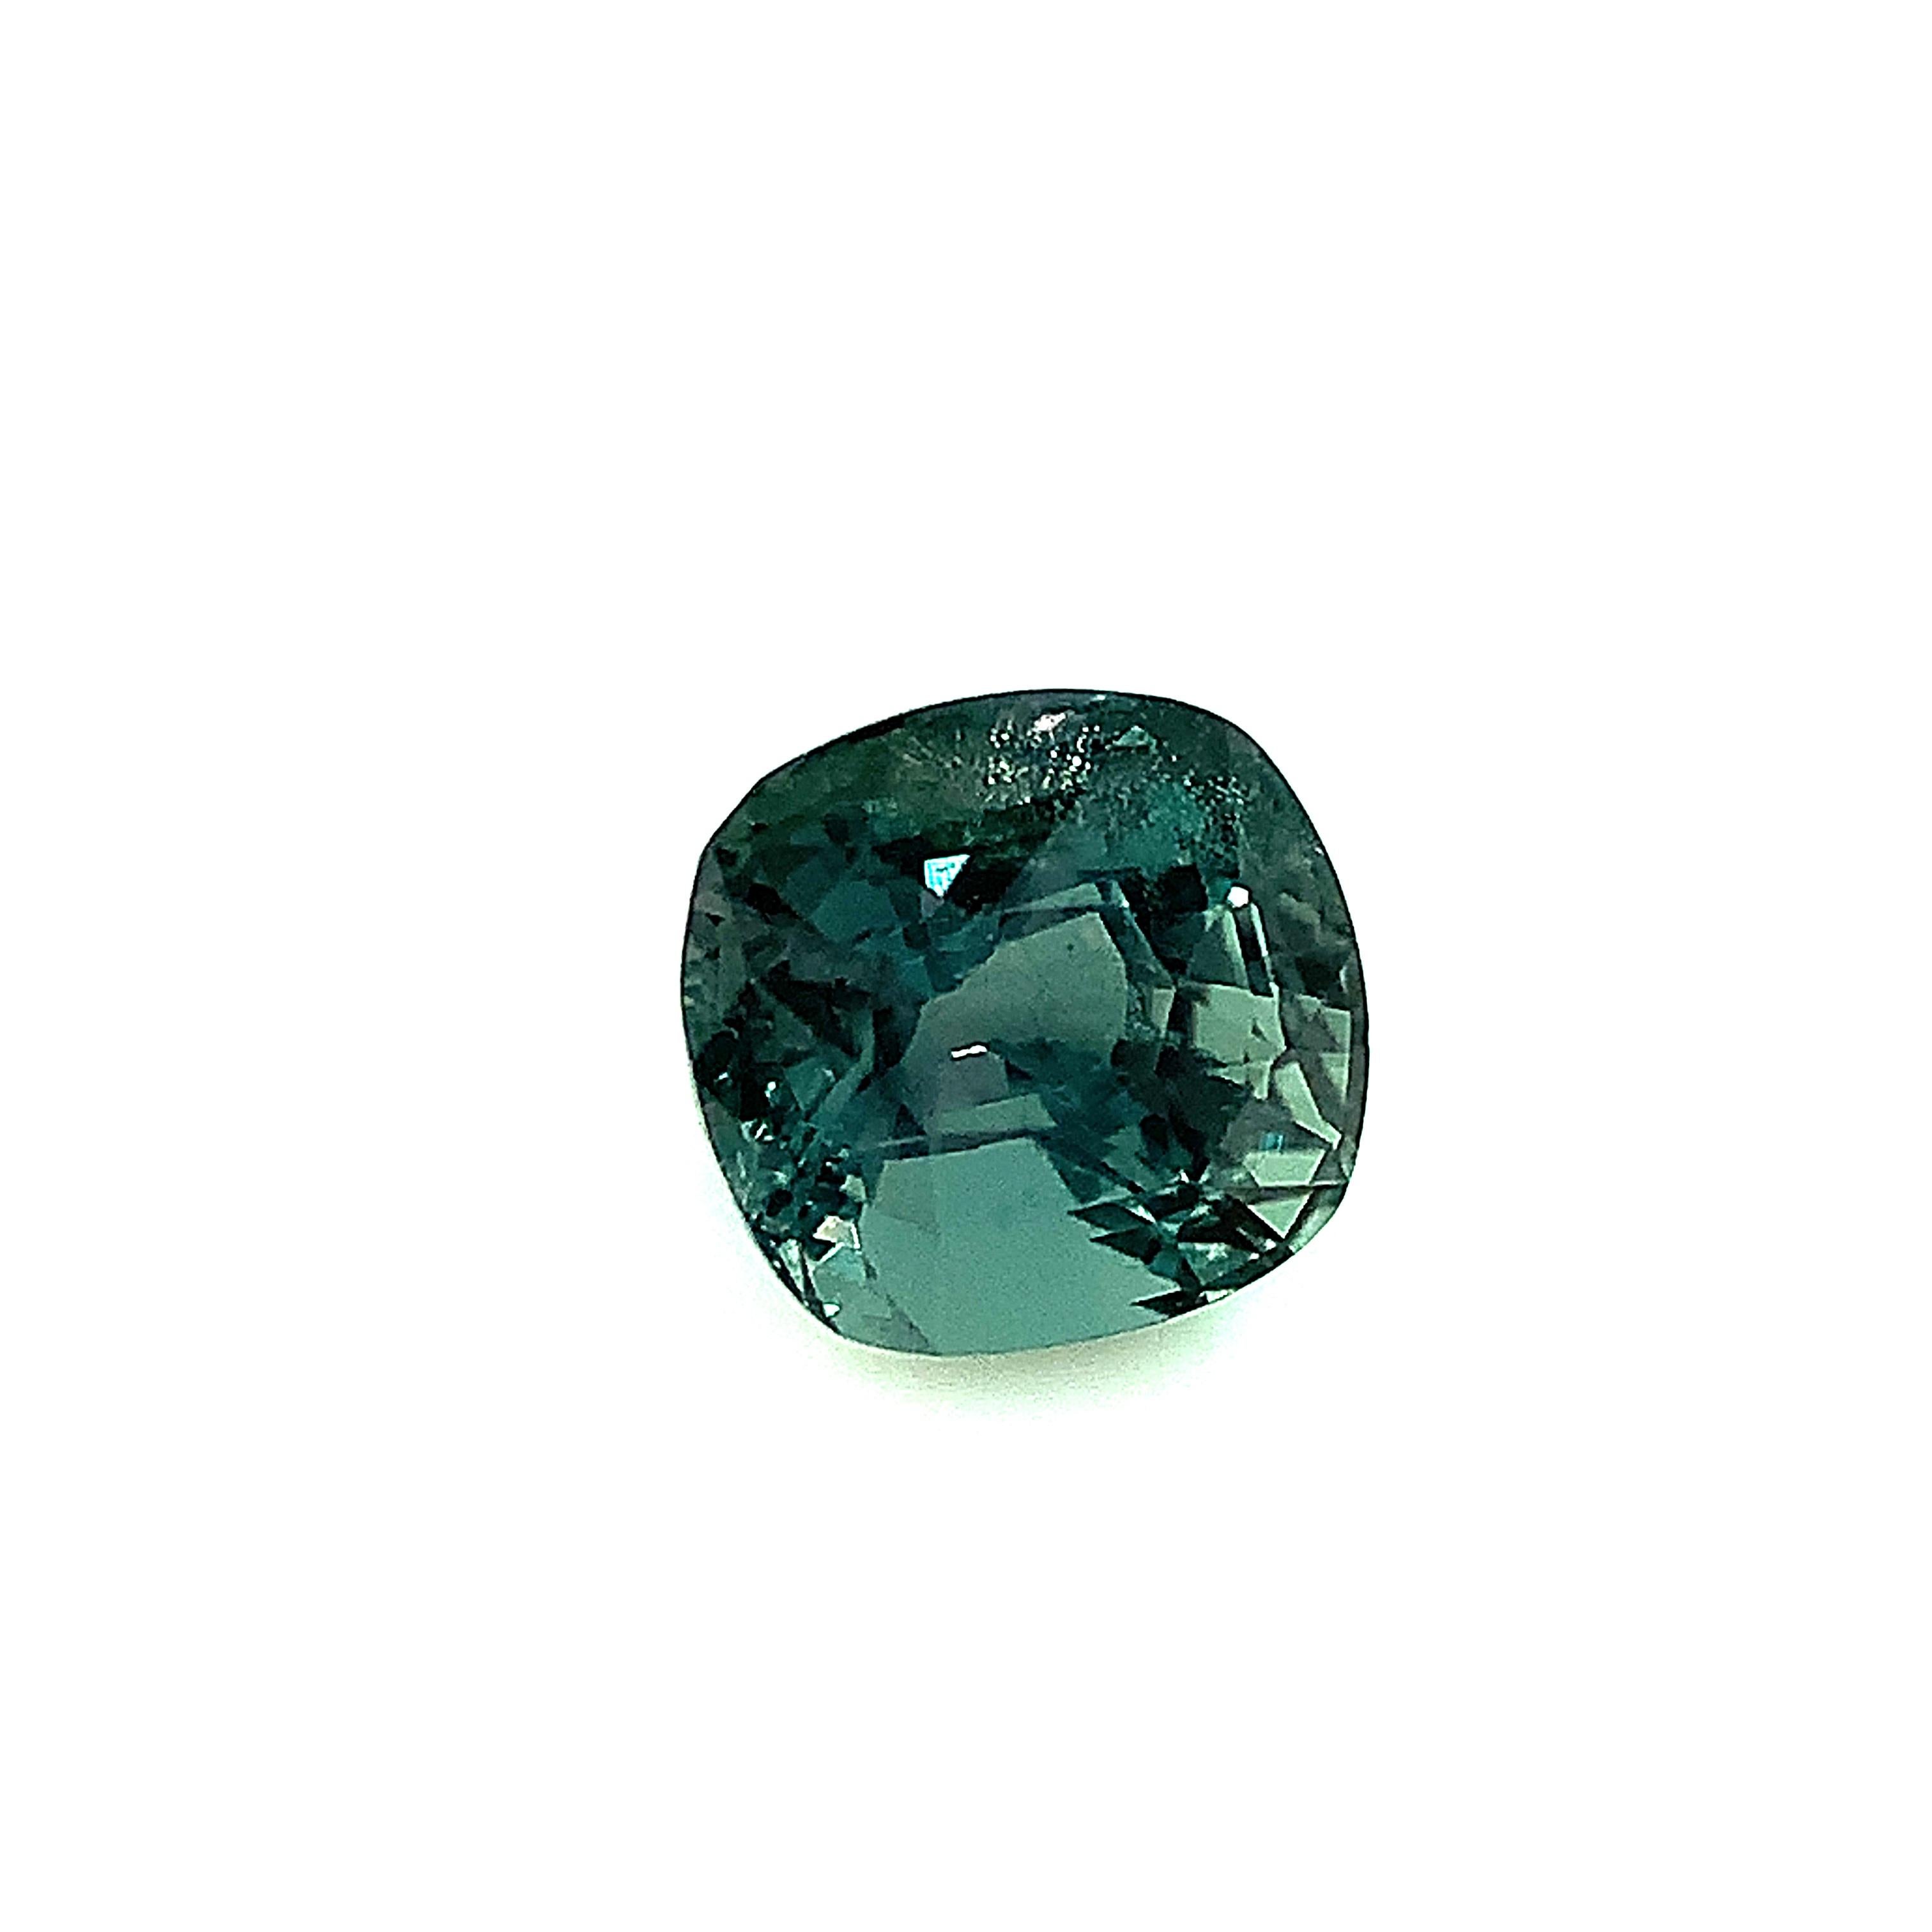 Artisan Alexandrite Chrysoberyl 1.16 Carat Loose Gemstone, GIA Certified - RTP For Sale